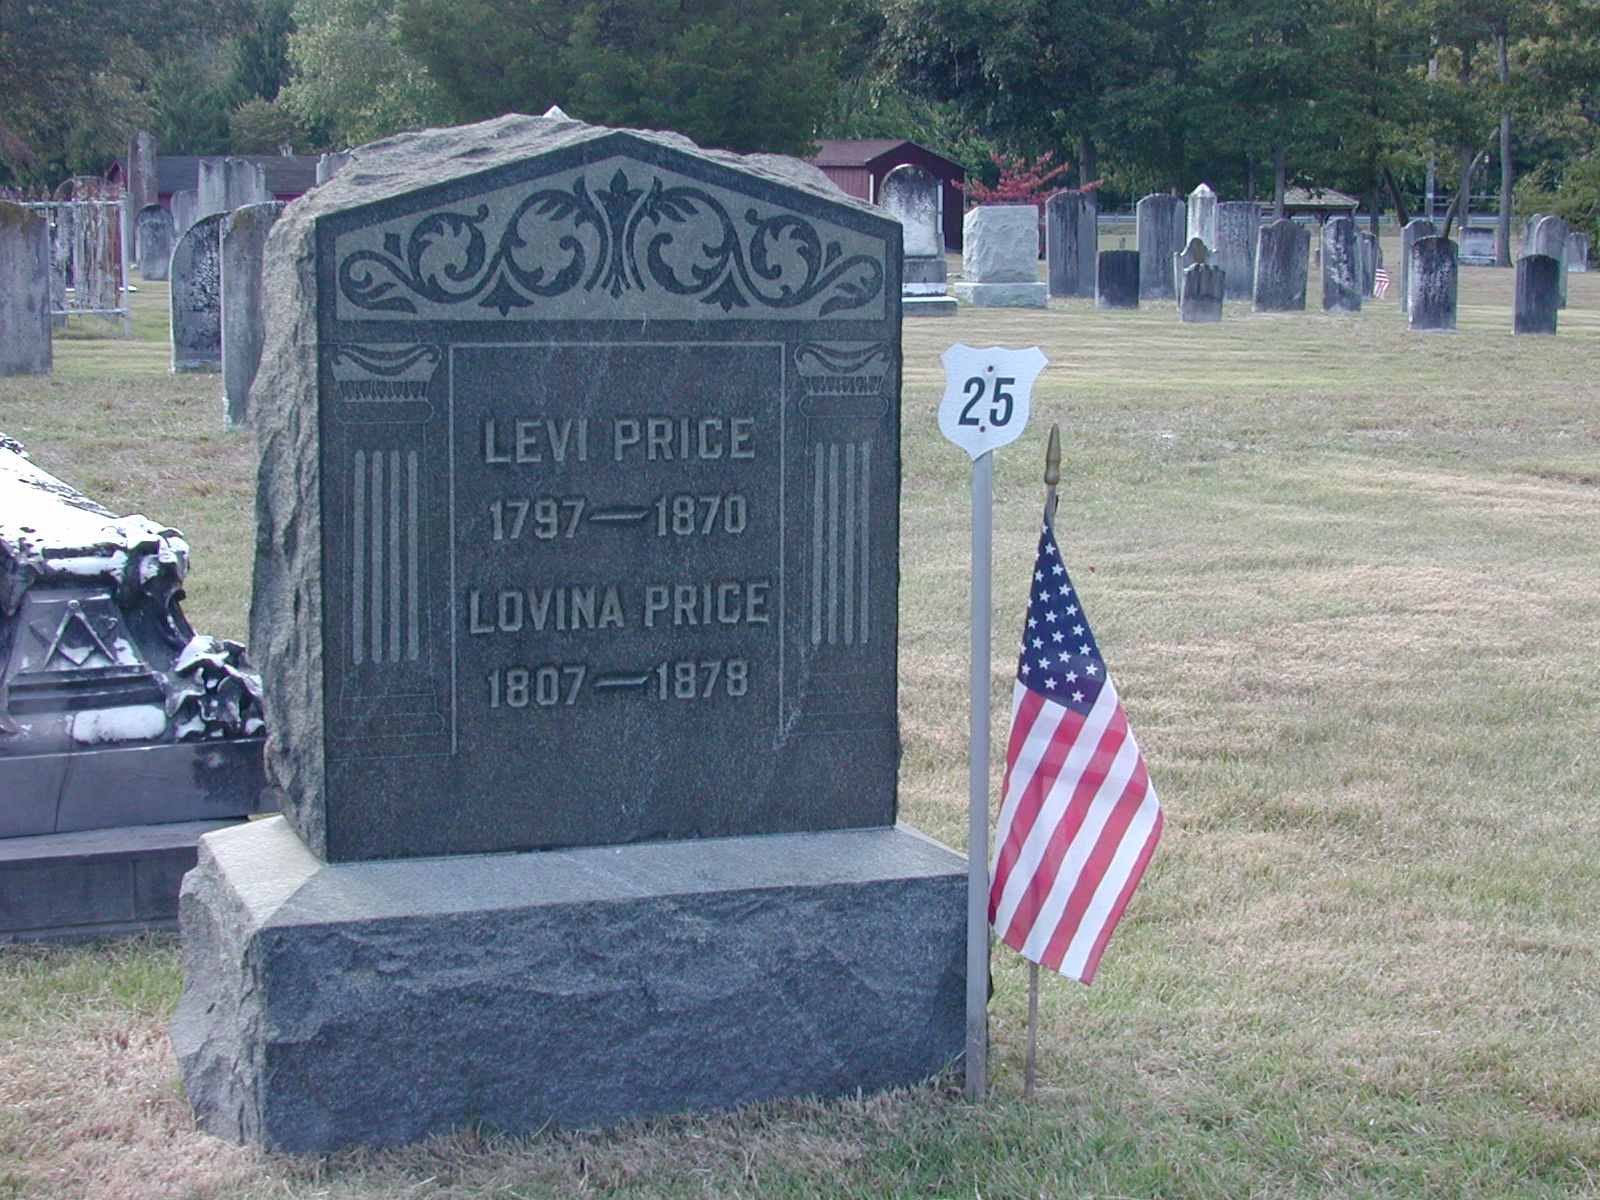 Levi Price